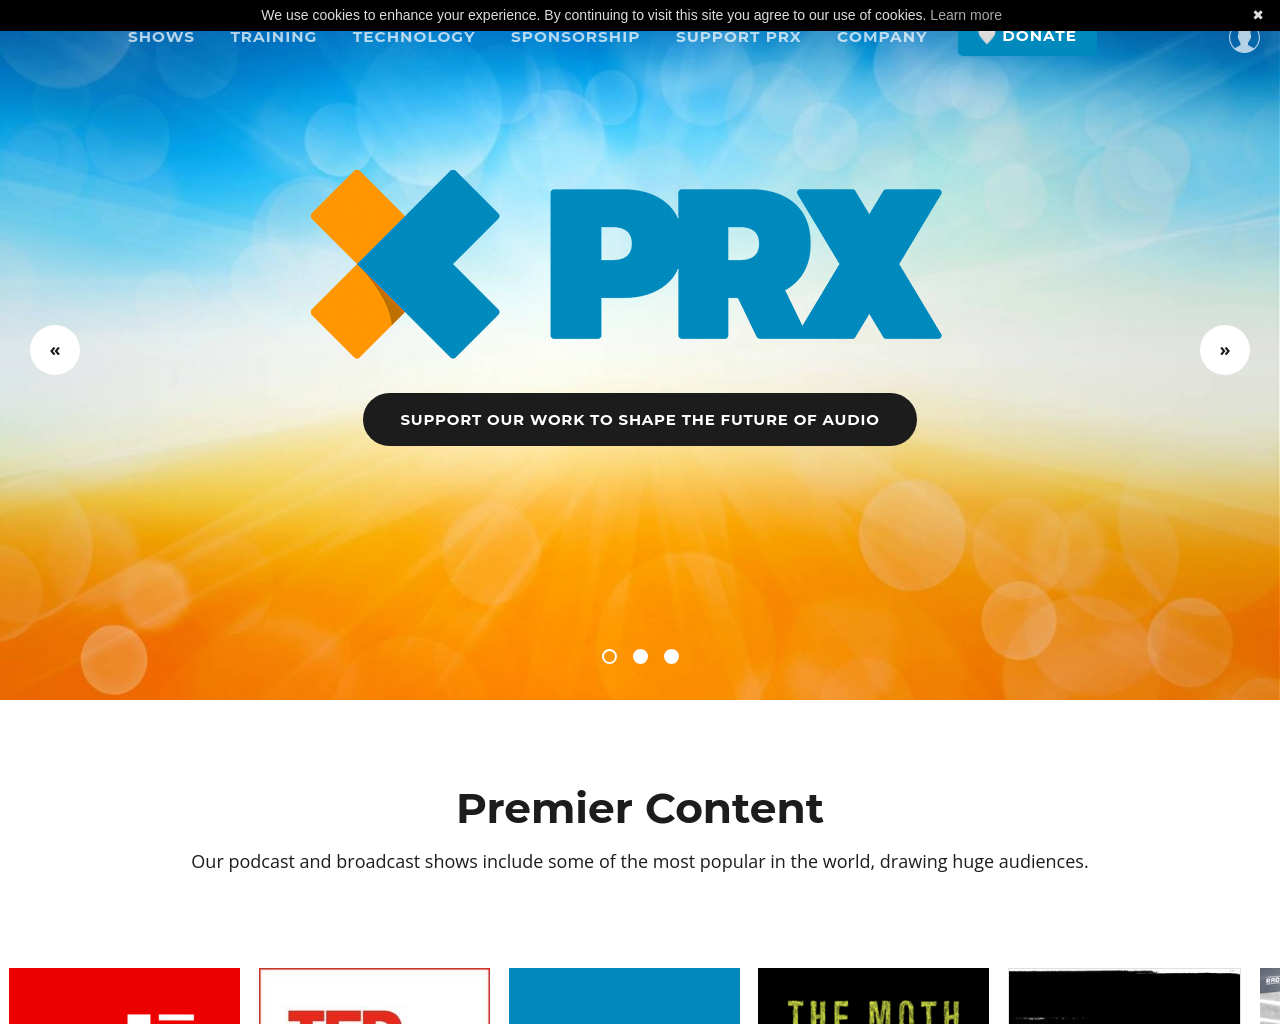 prx.org